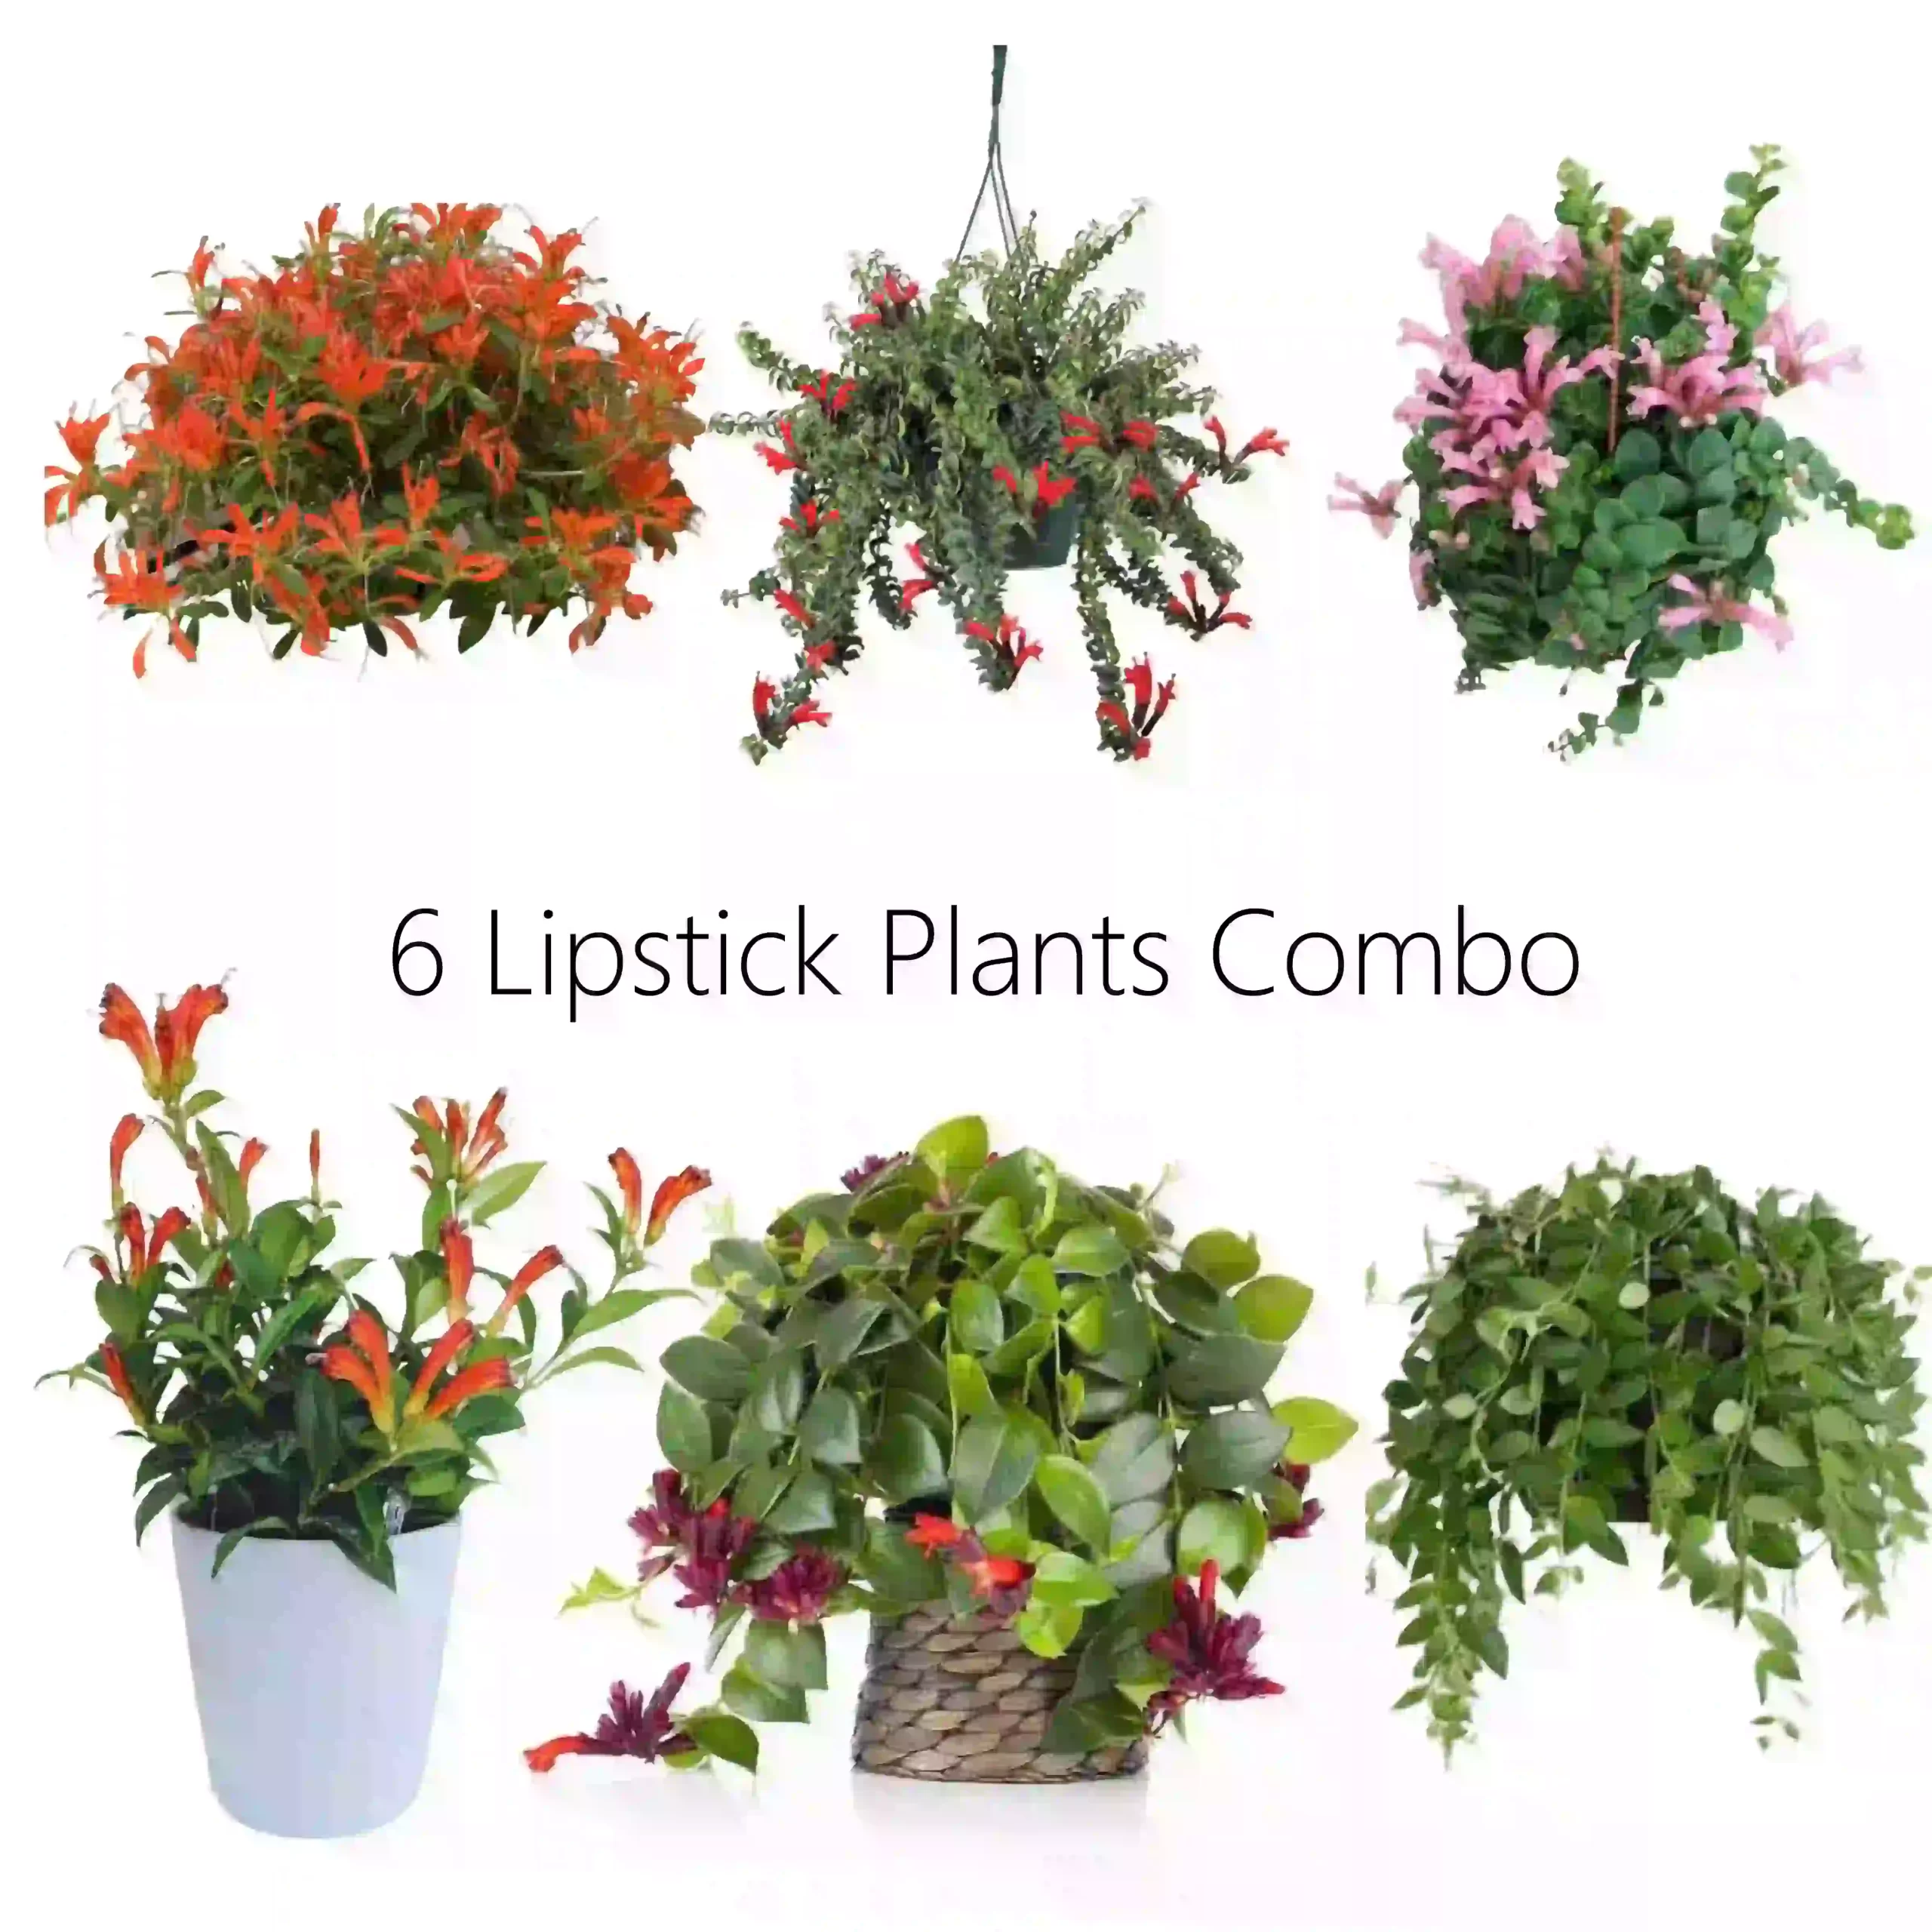 20 Lipstick Plants Combo   Jiffy Plants